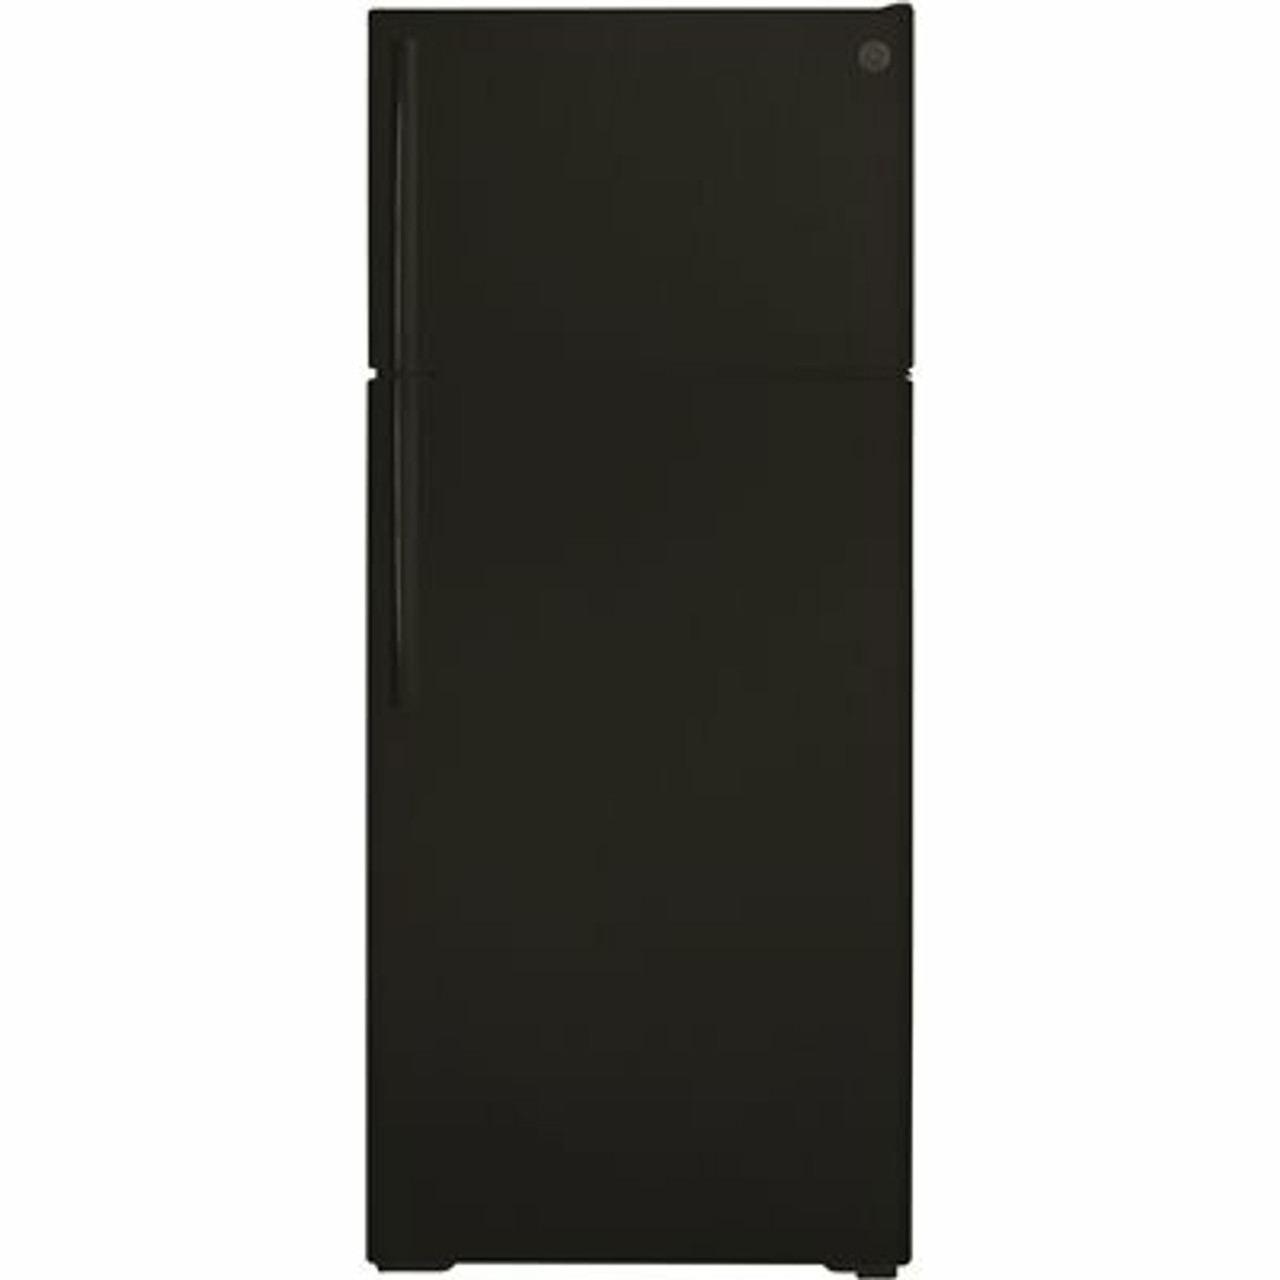 Ge 17.5 Cu. Ft. Top Freezer Refrigerator In Black Energy Star